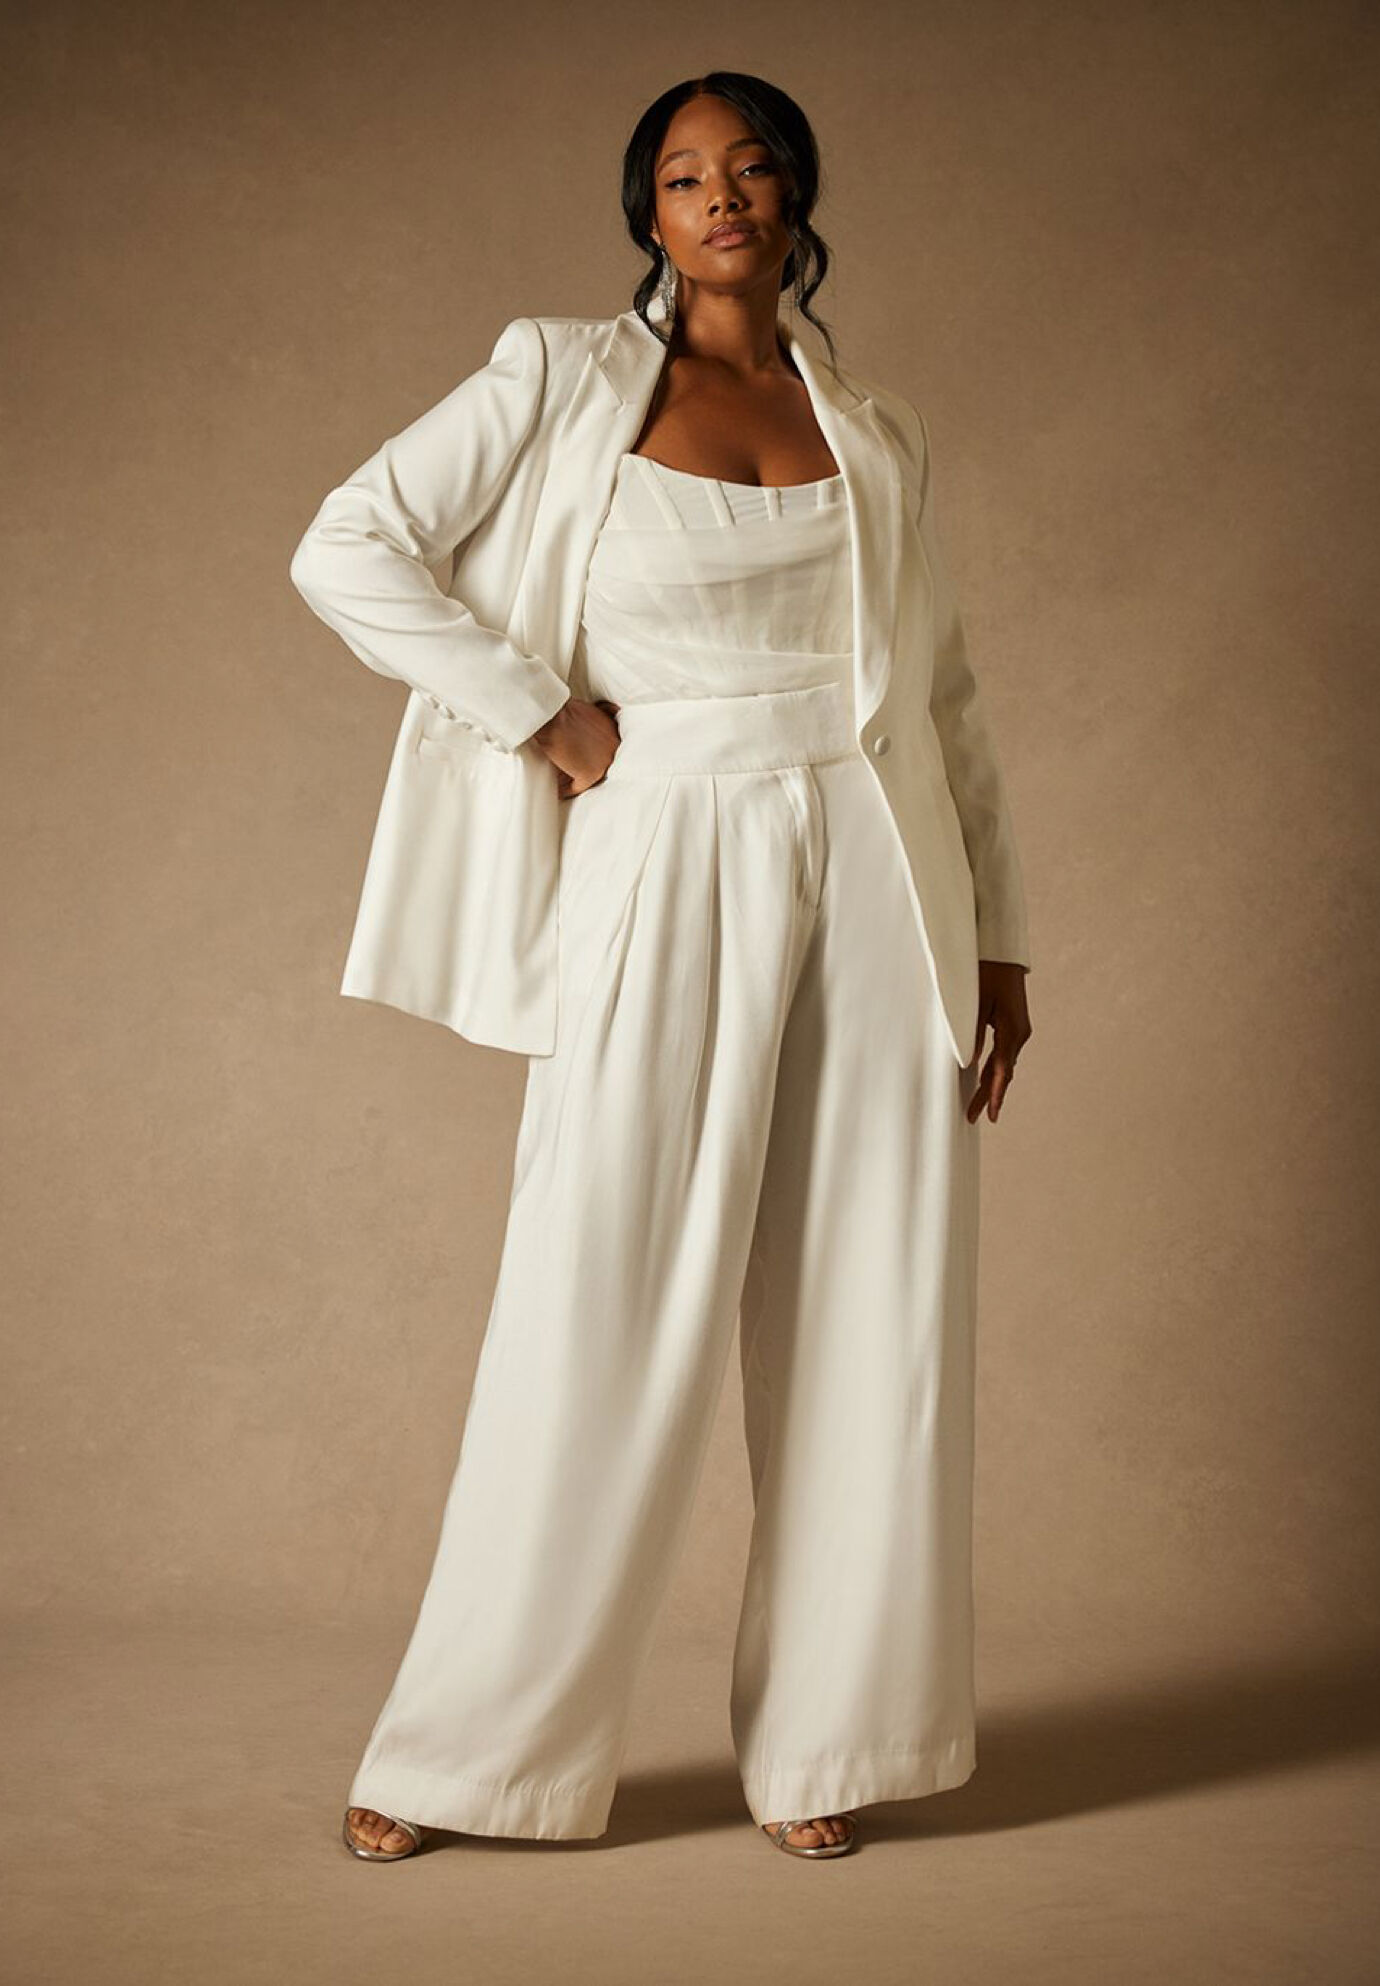 ELOQUII Women's Plus Size Colorblock Pant - 18, White